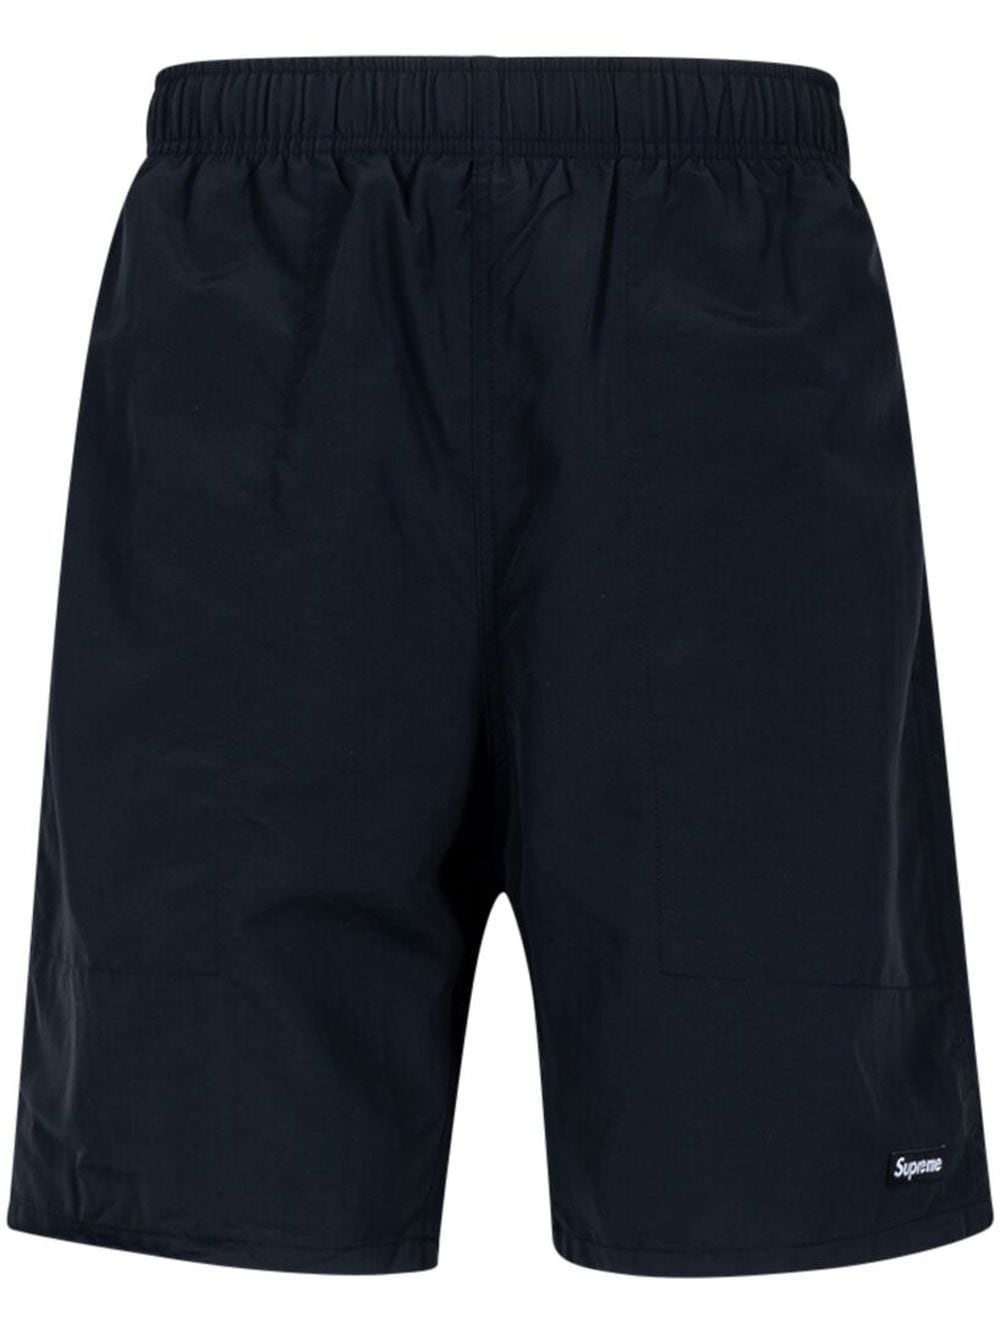 nylon water shorts - 1